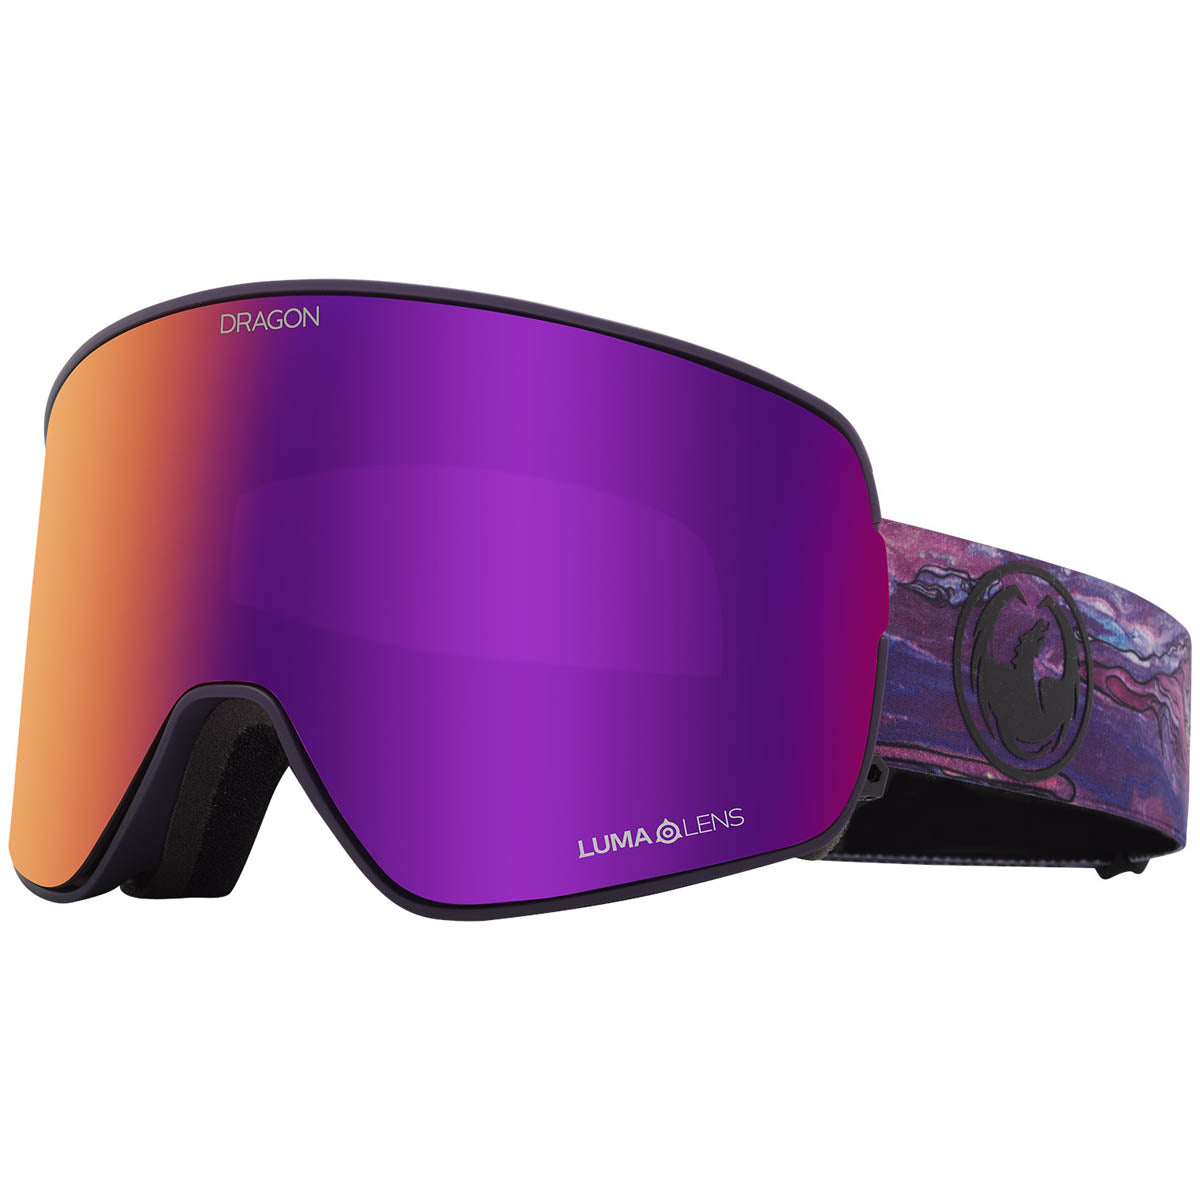 Dragon Nfx2 Snowboard Goggles - Benchet/Lumalens Purple ion – CCS